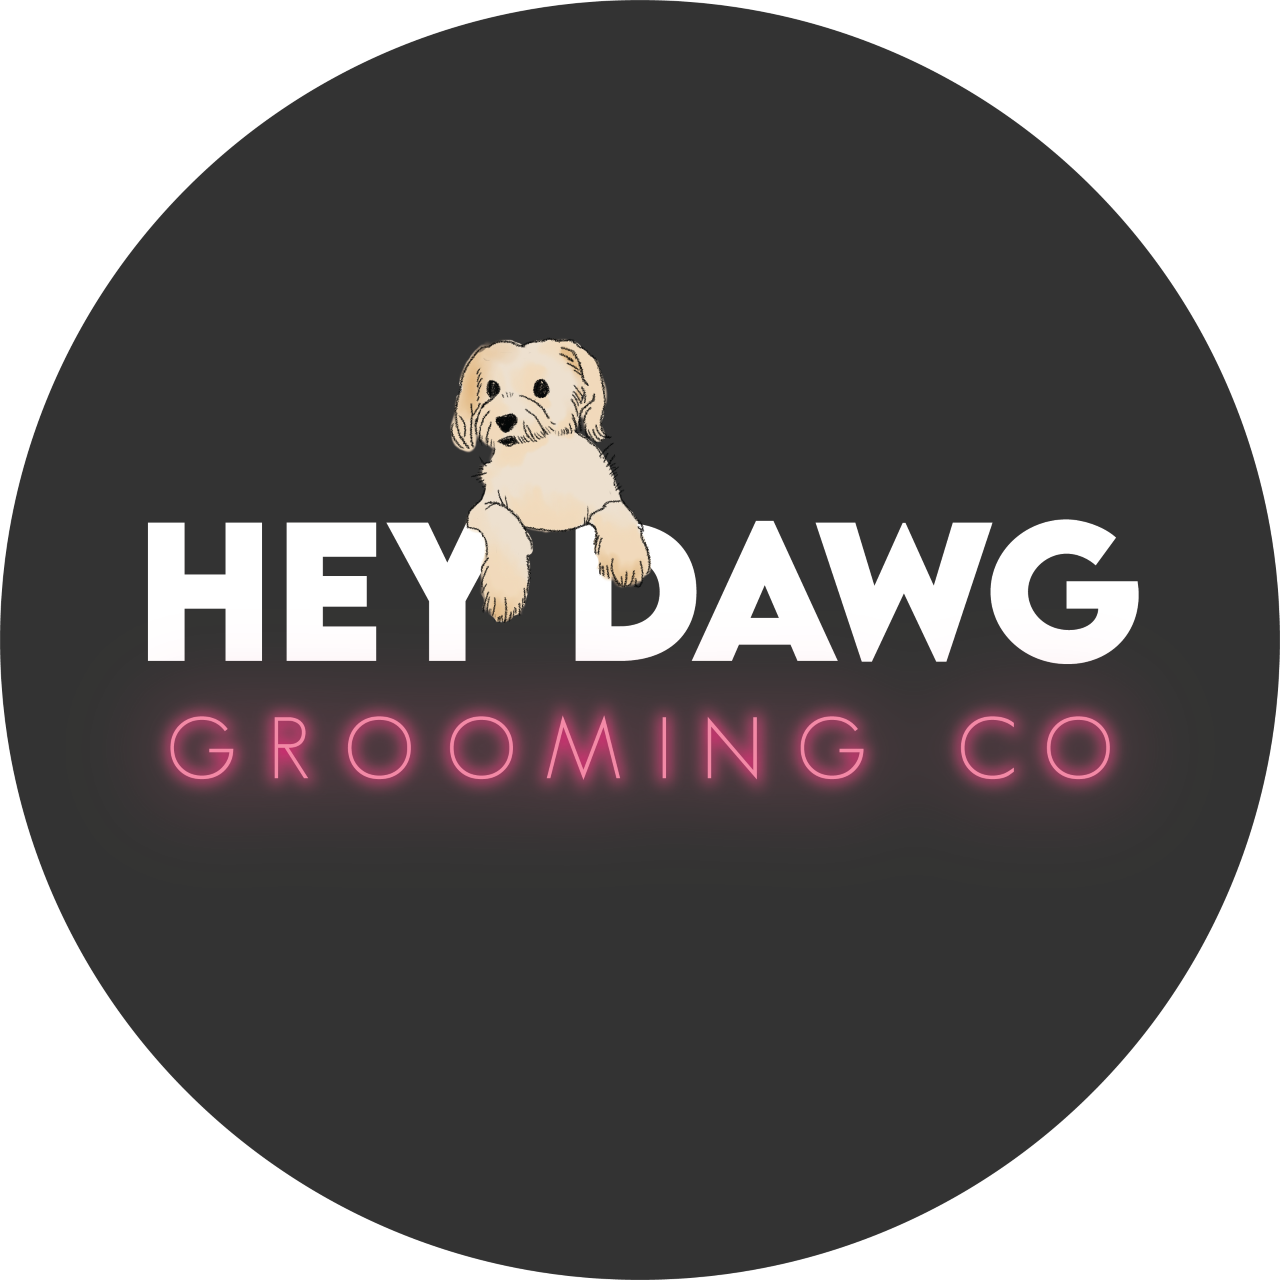 Hey Dawg Grooming Co